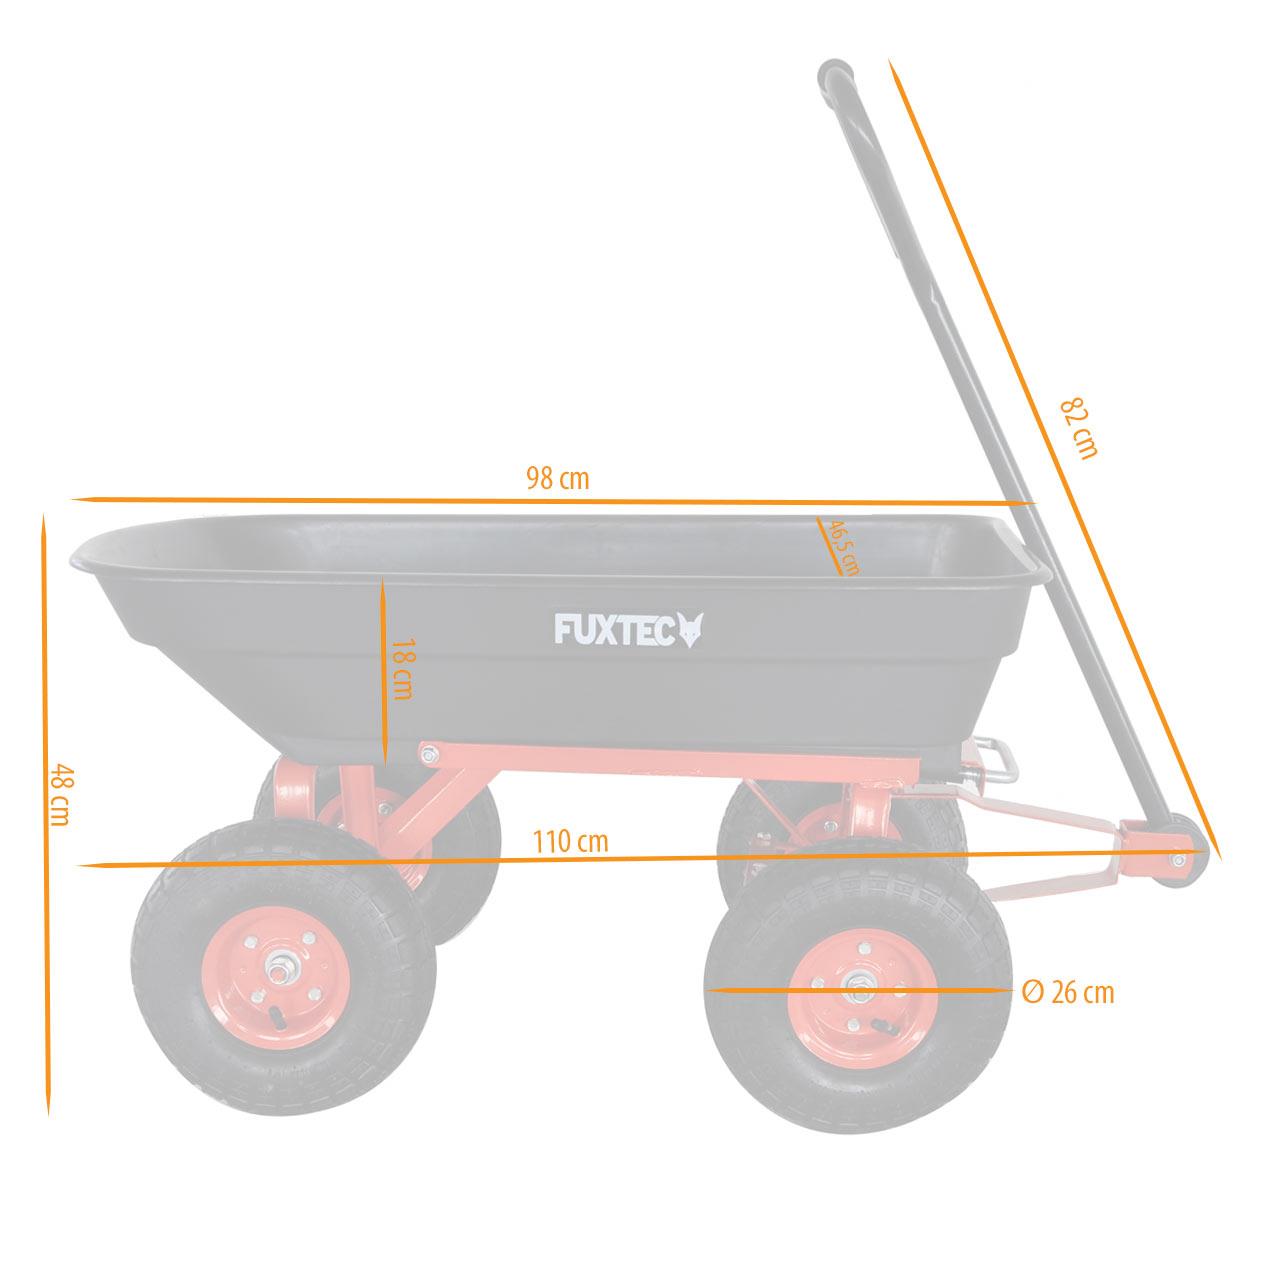 FUXTEC garden tipper cart FX-KW2175 in black